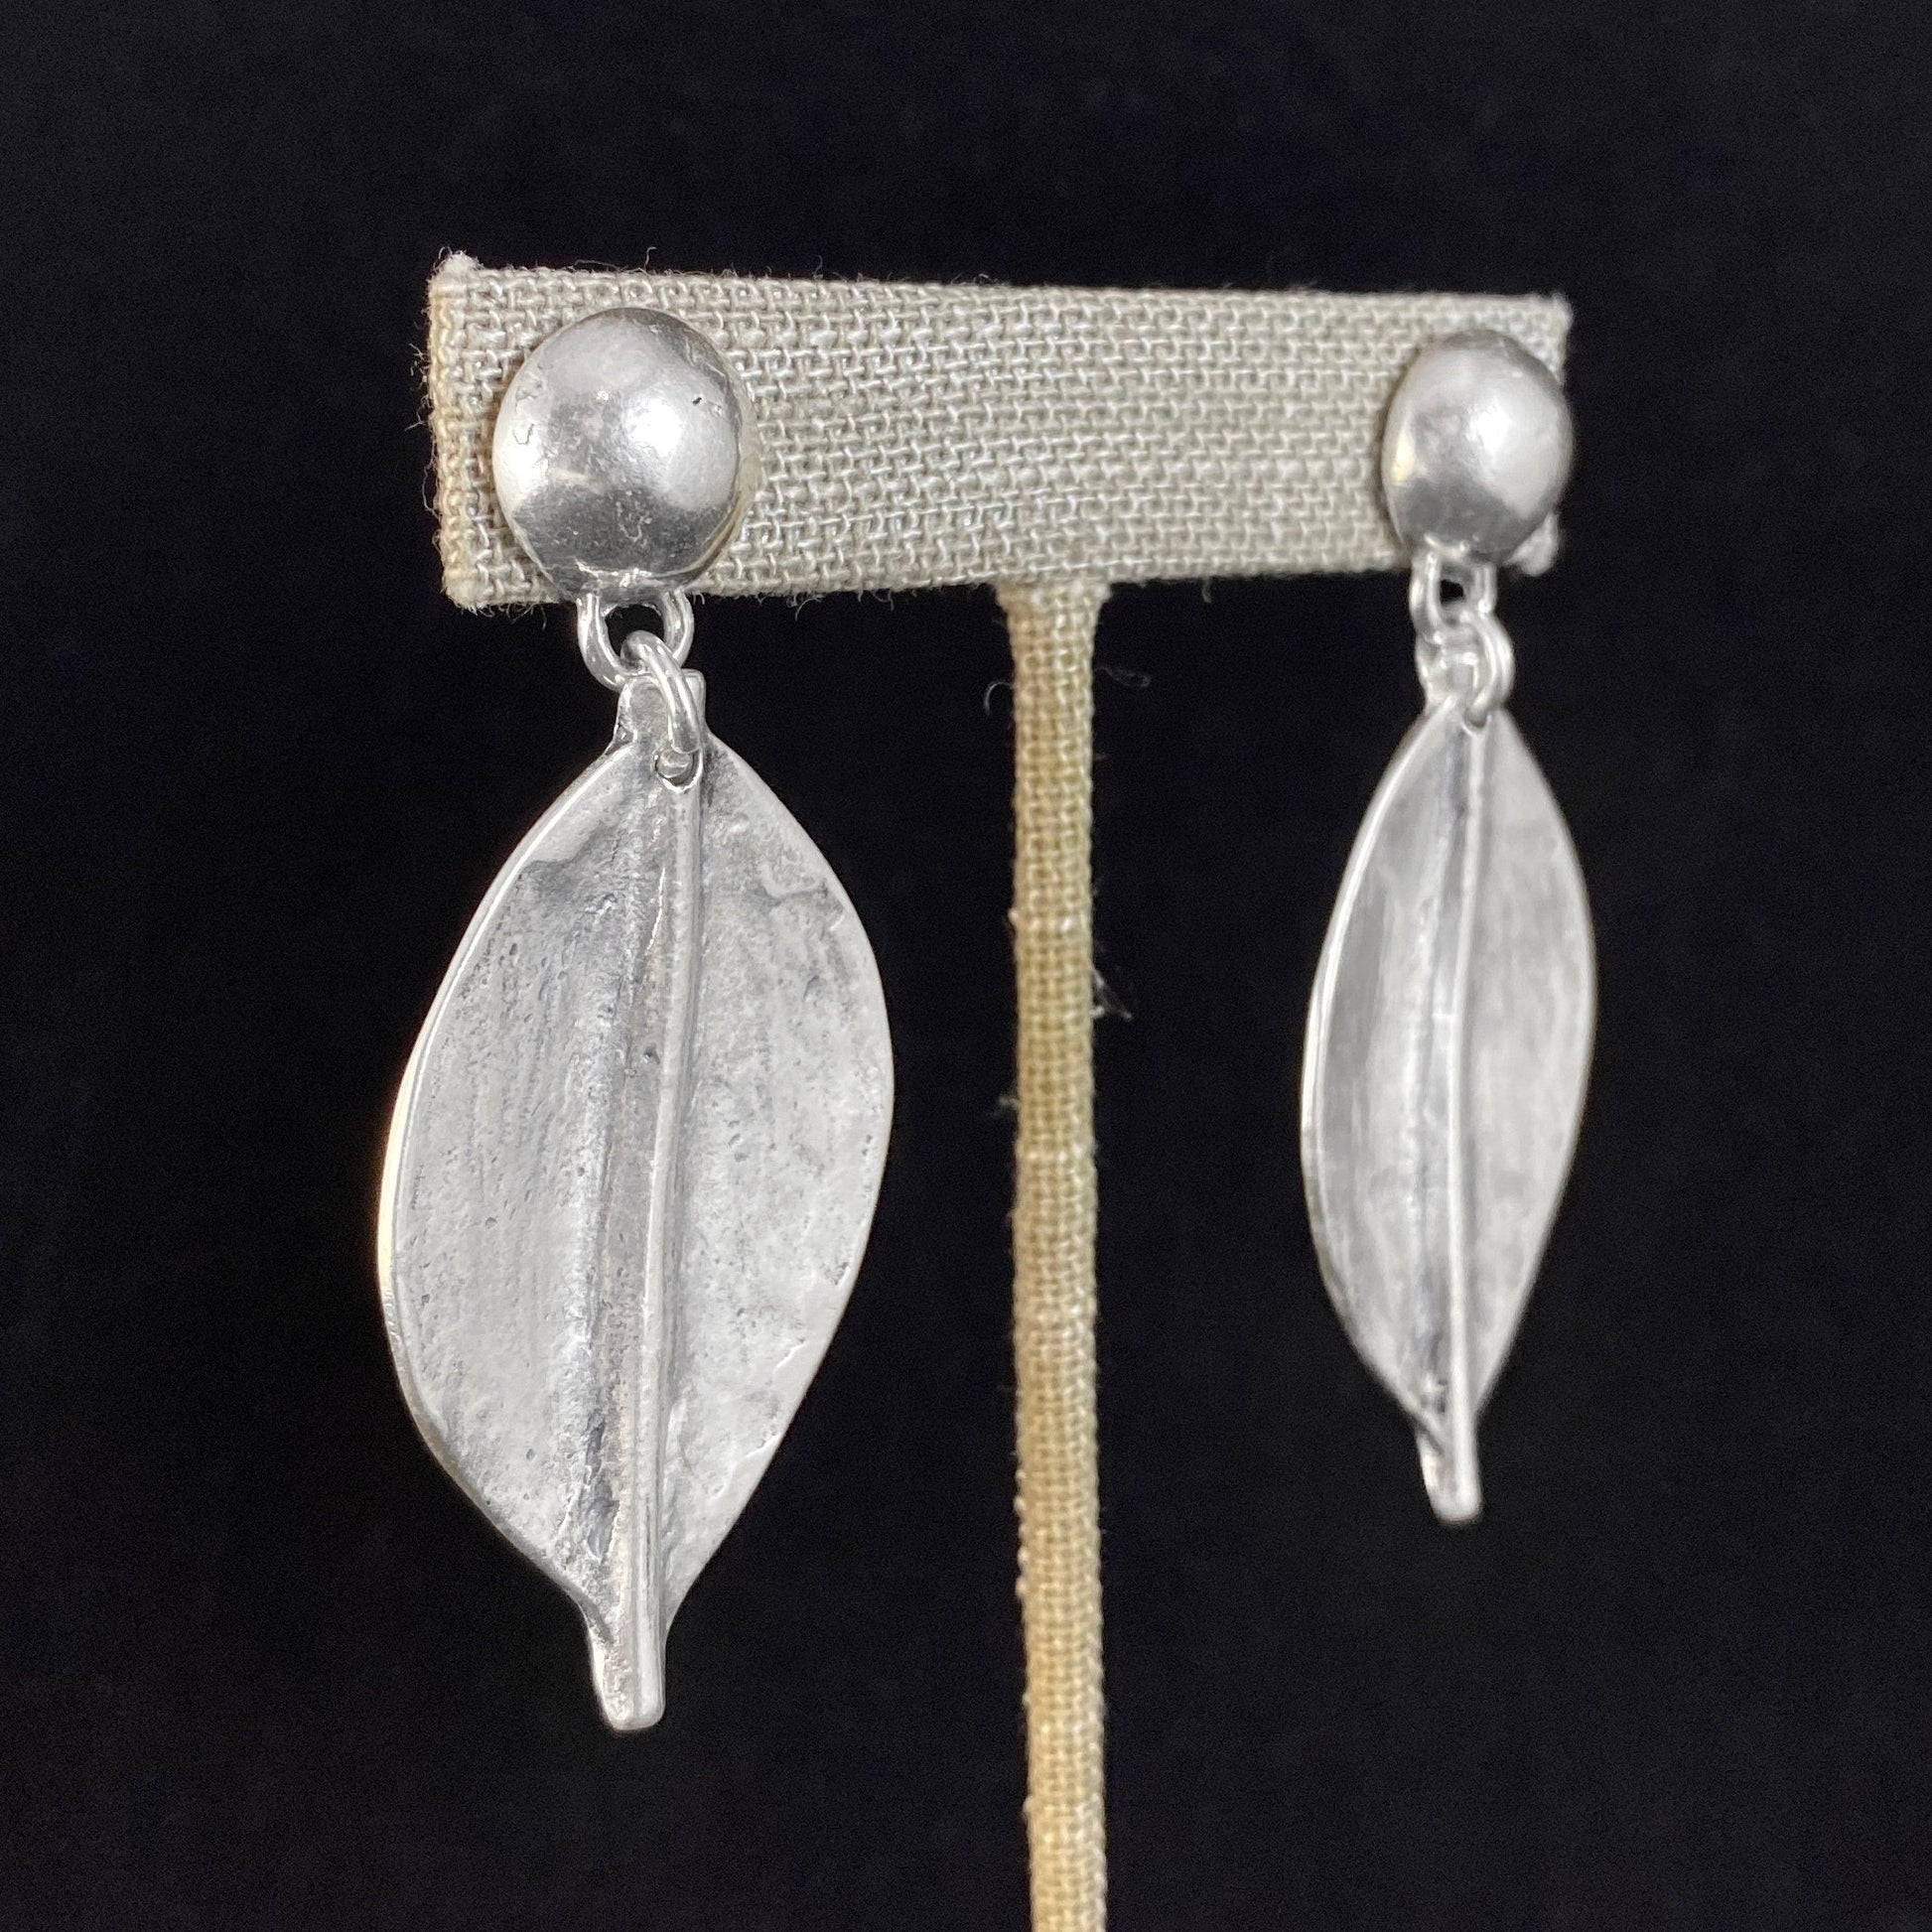 Chunky Silver Leaf Post Earrings - Handmade Nickel Free Ulla Jewelry